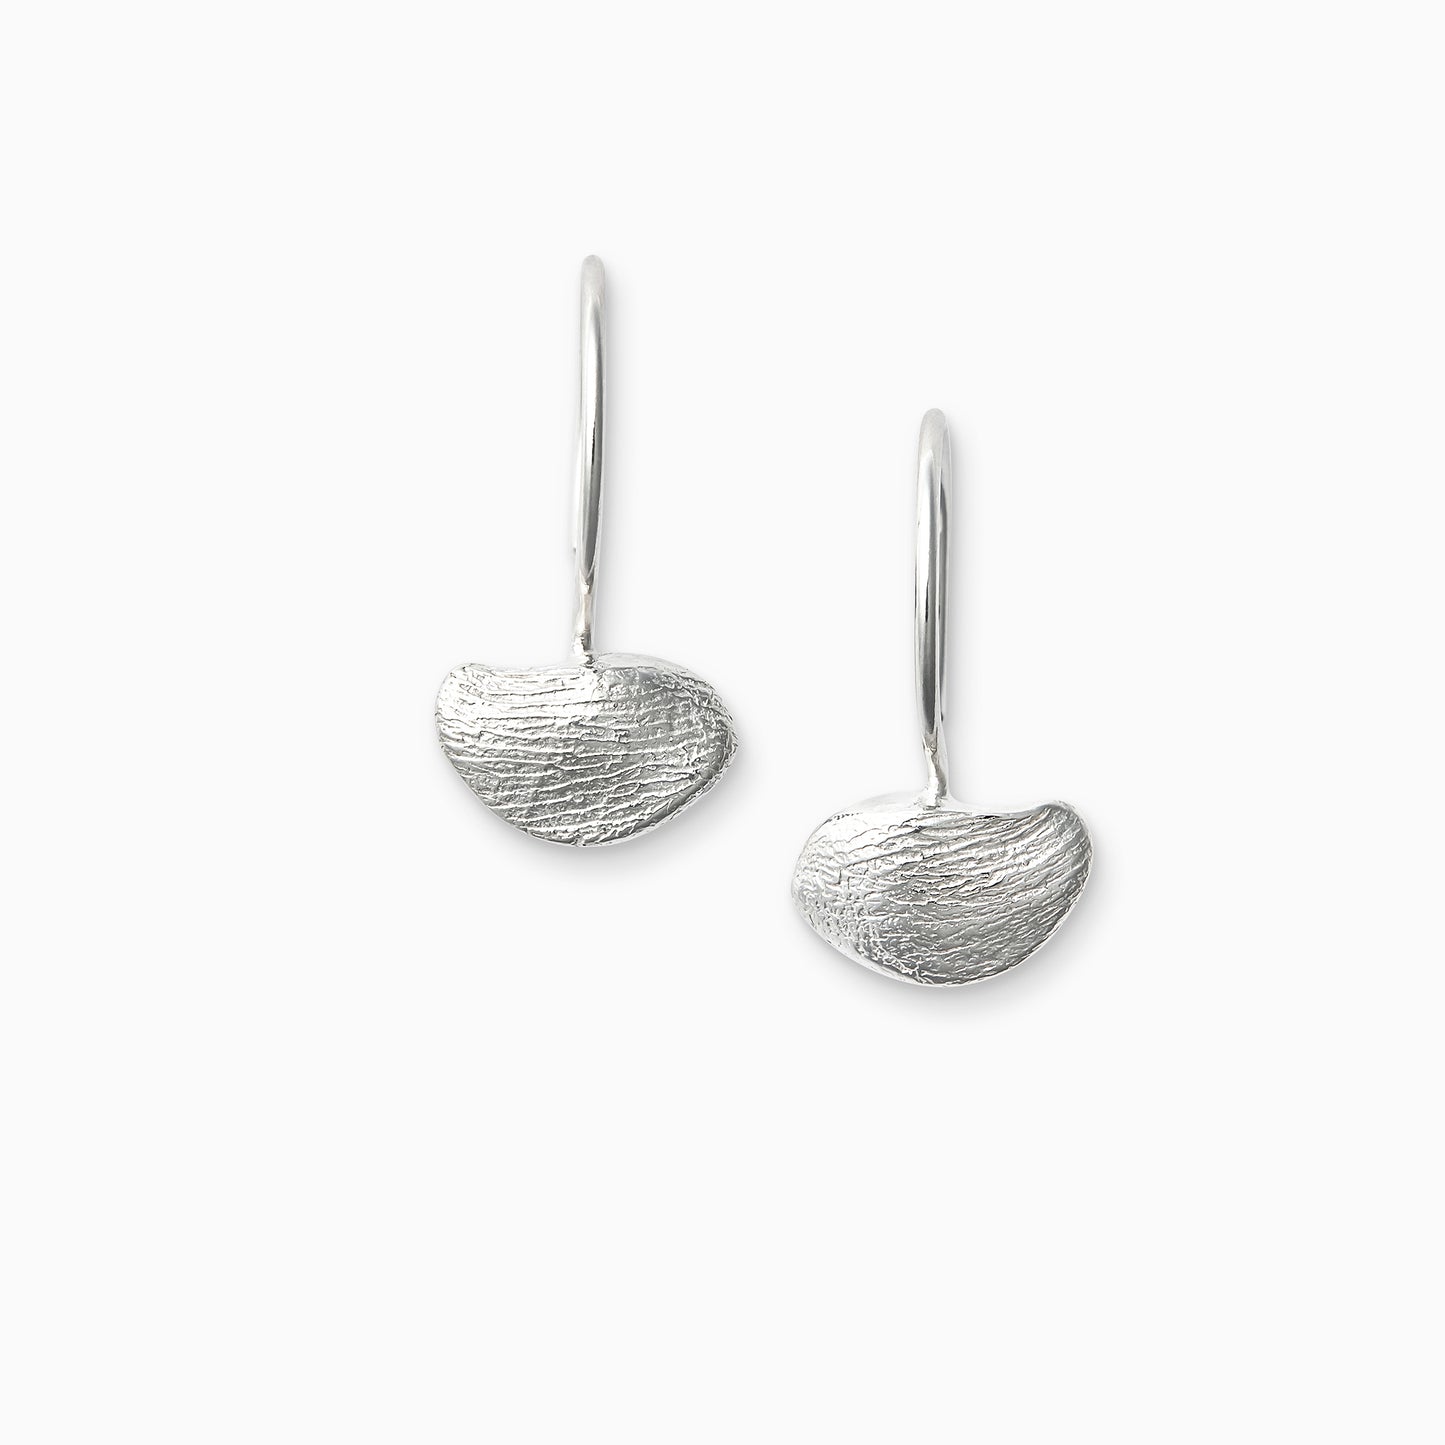 Lamu III earrings